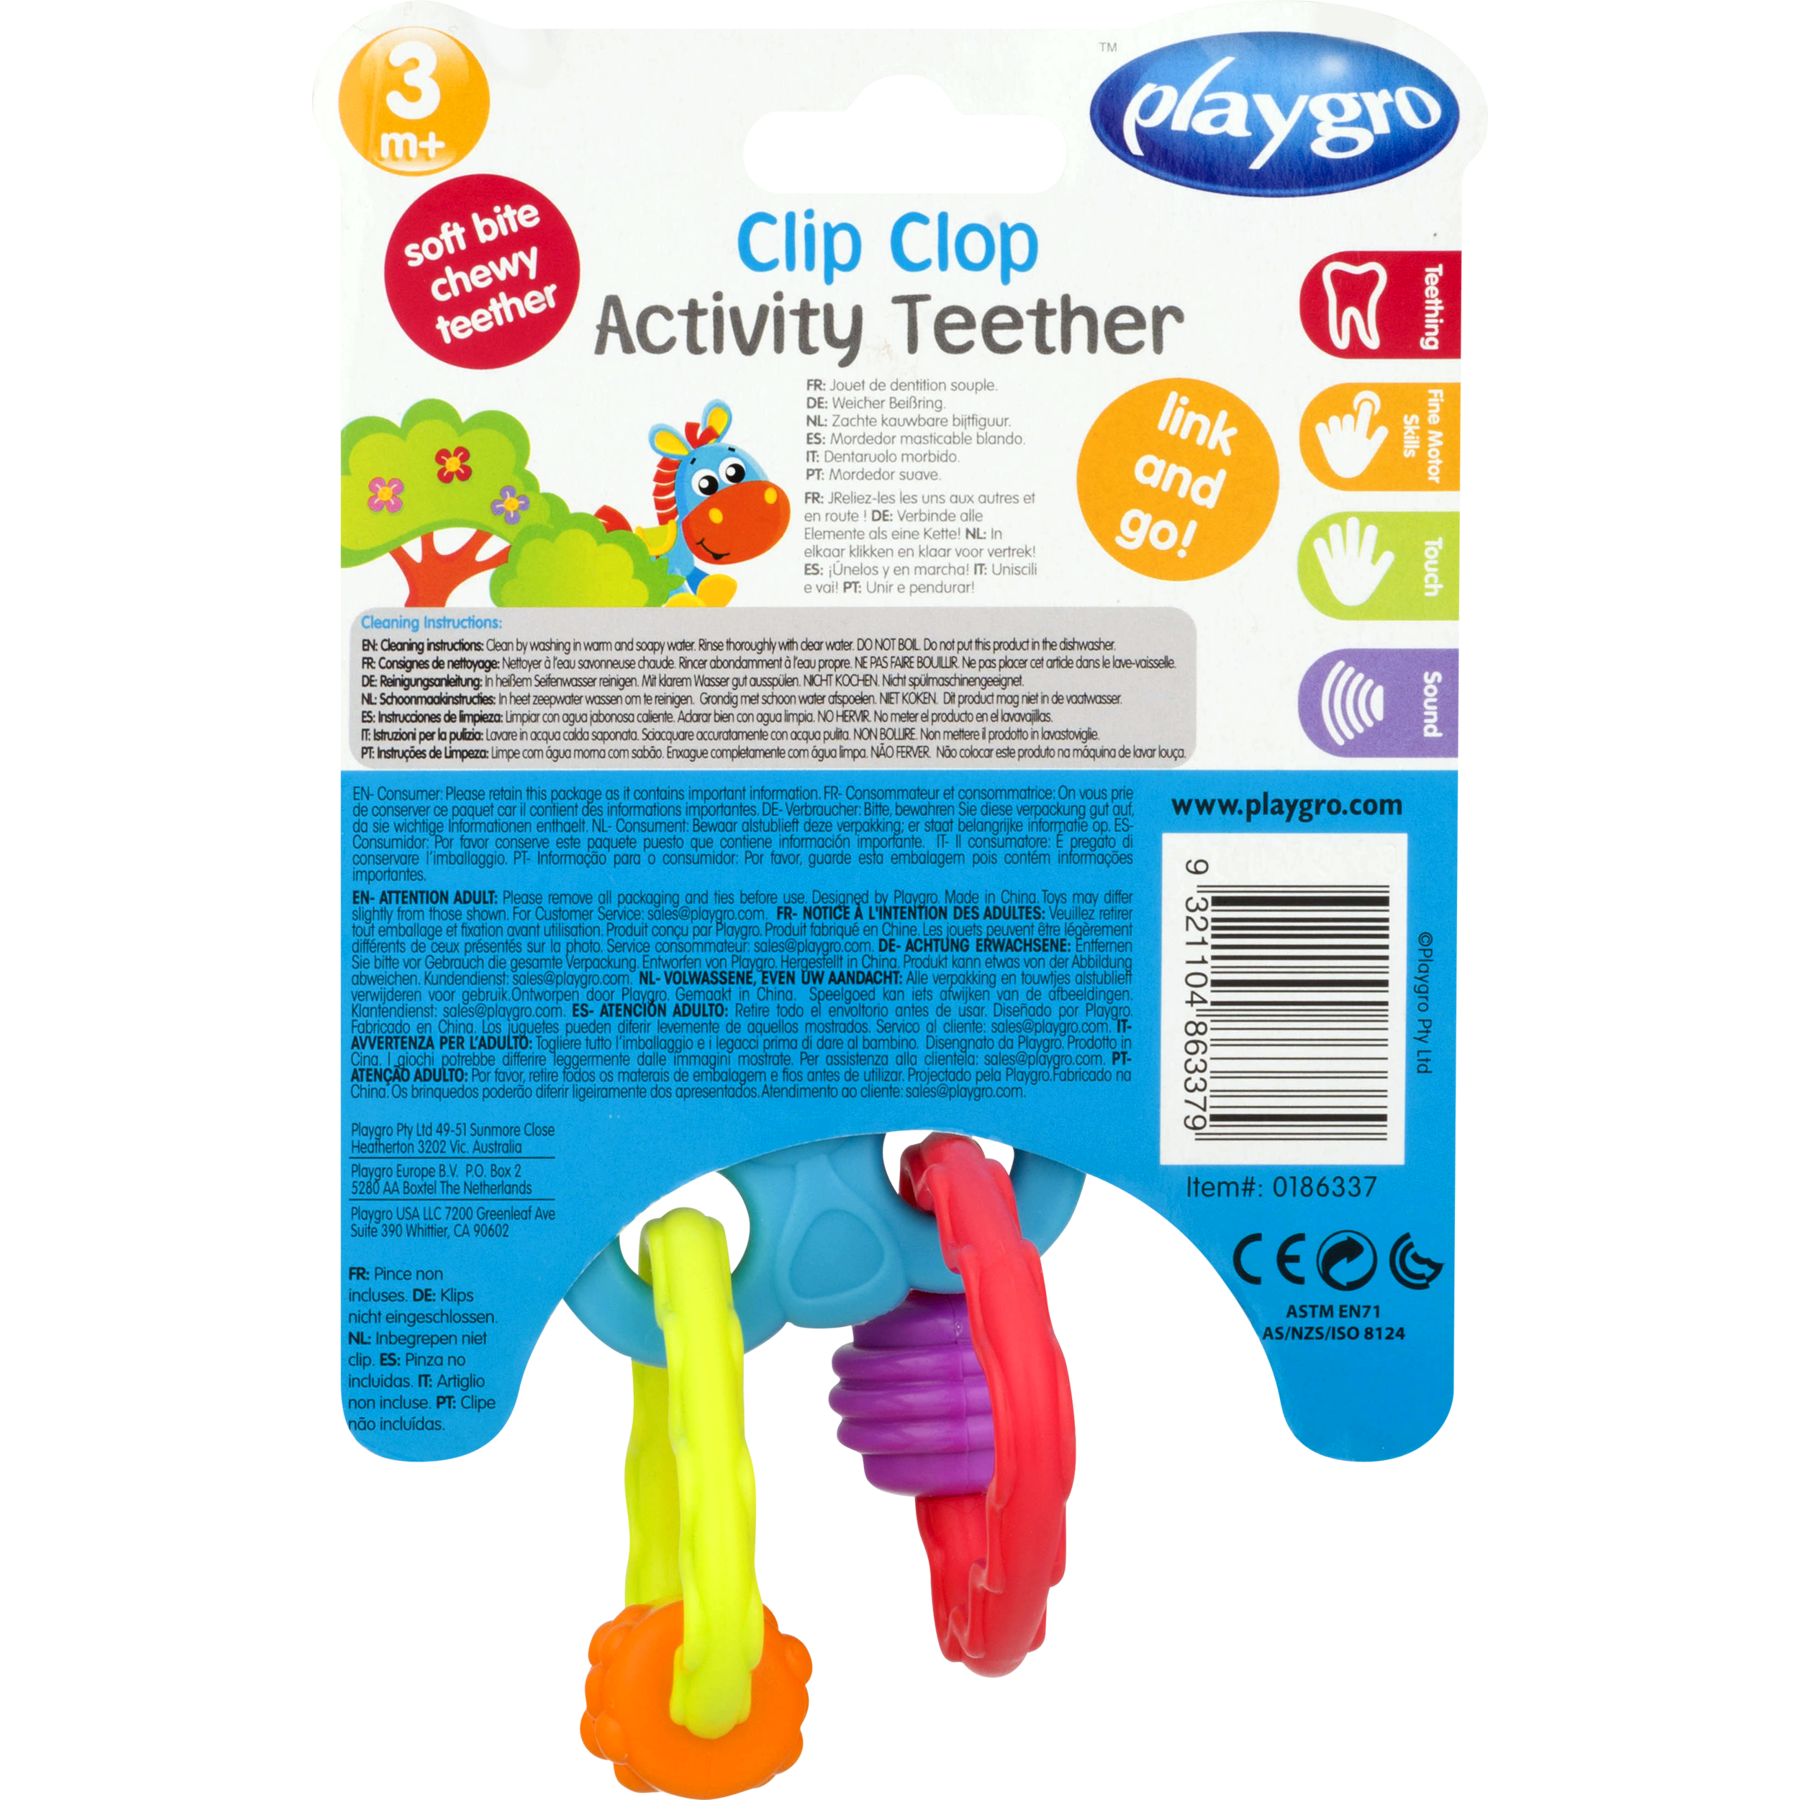 Playgro - Clip Clop Activity Teether